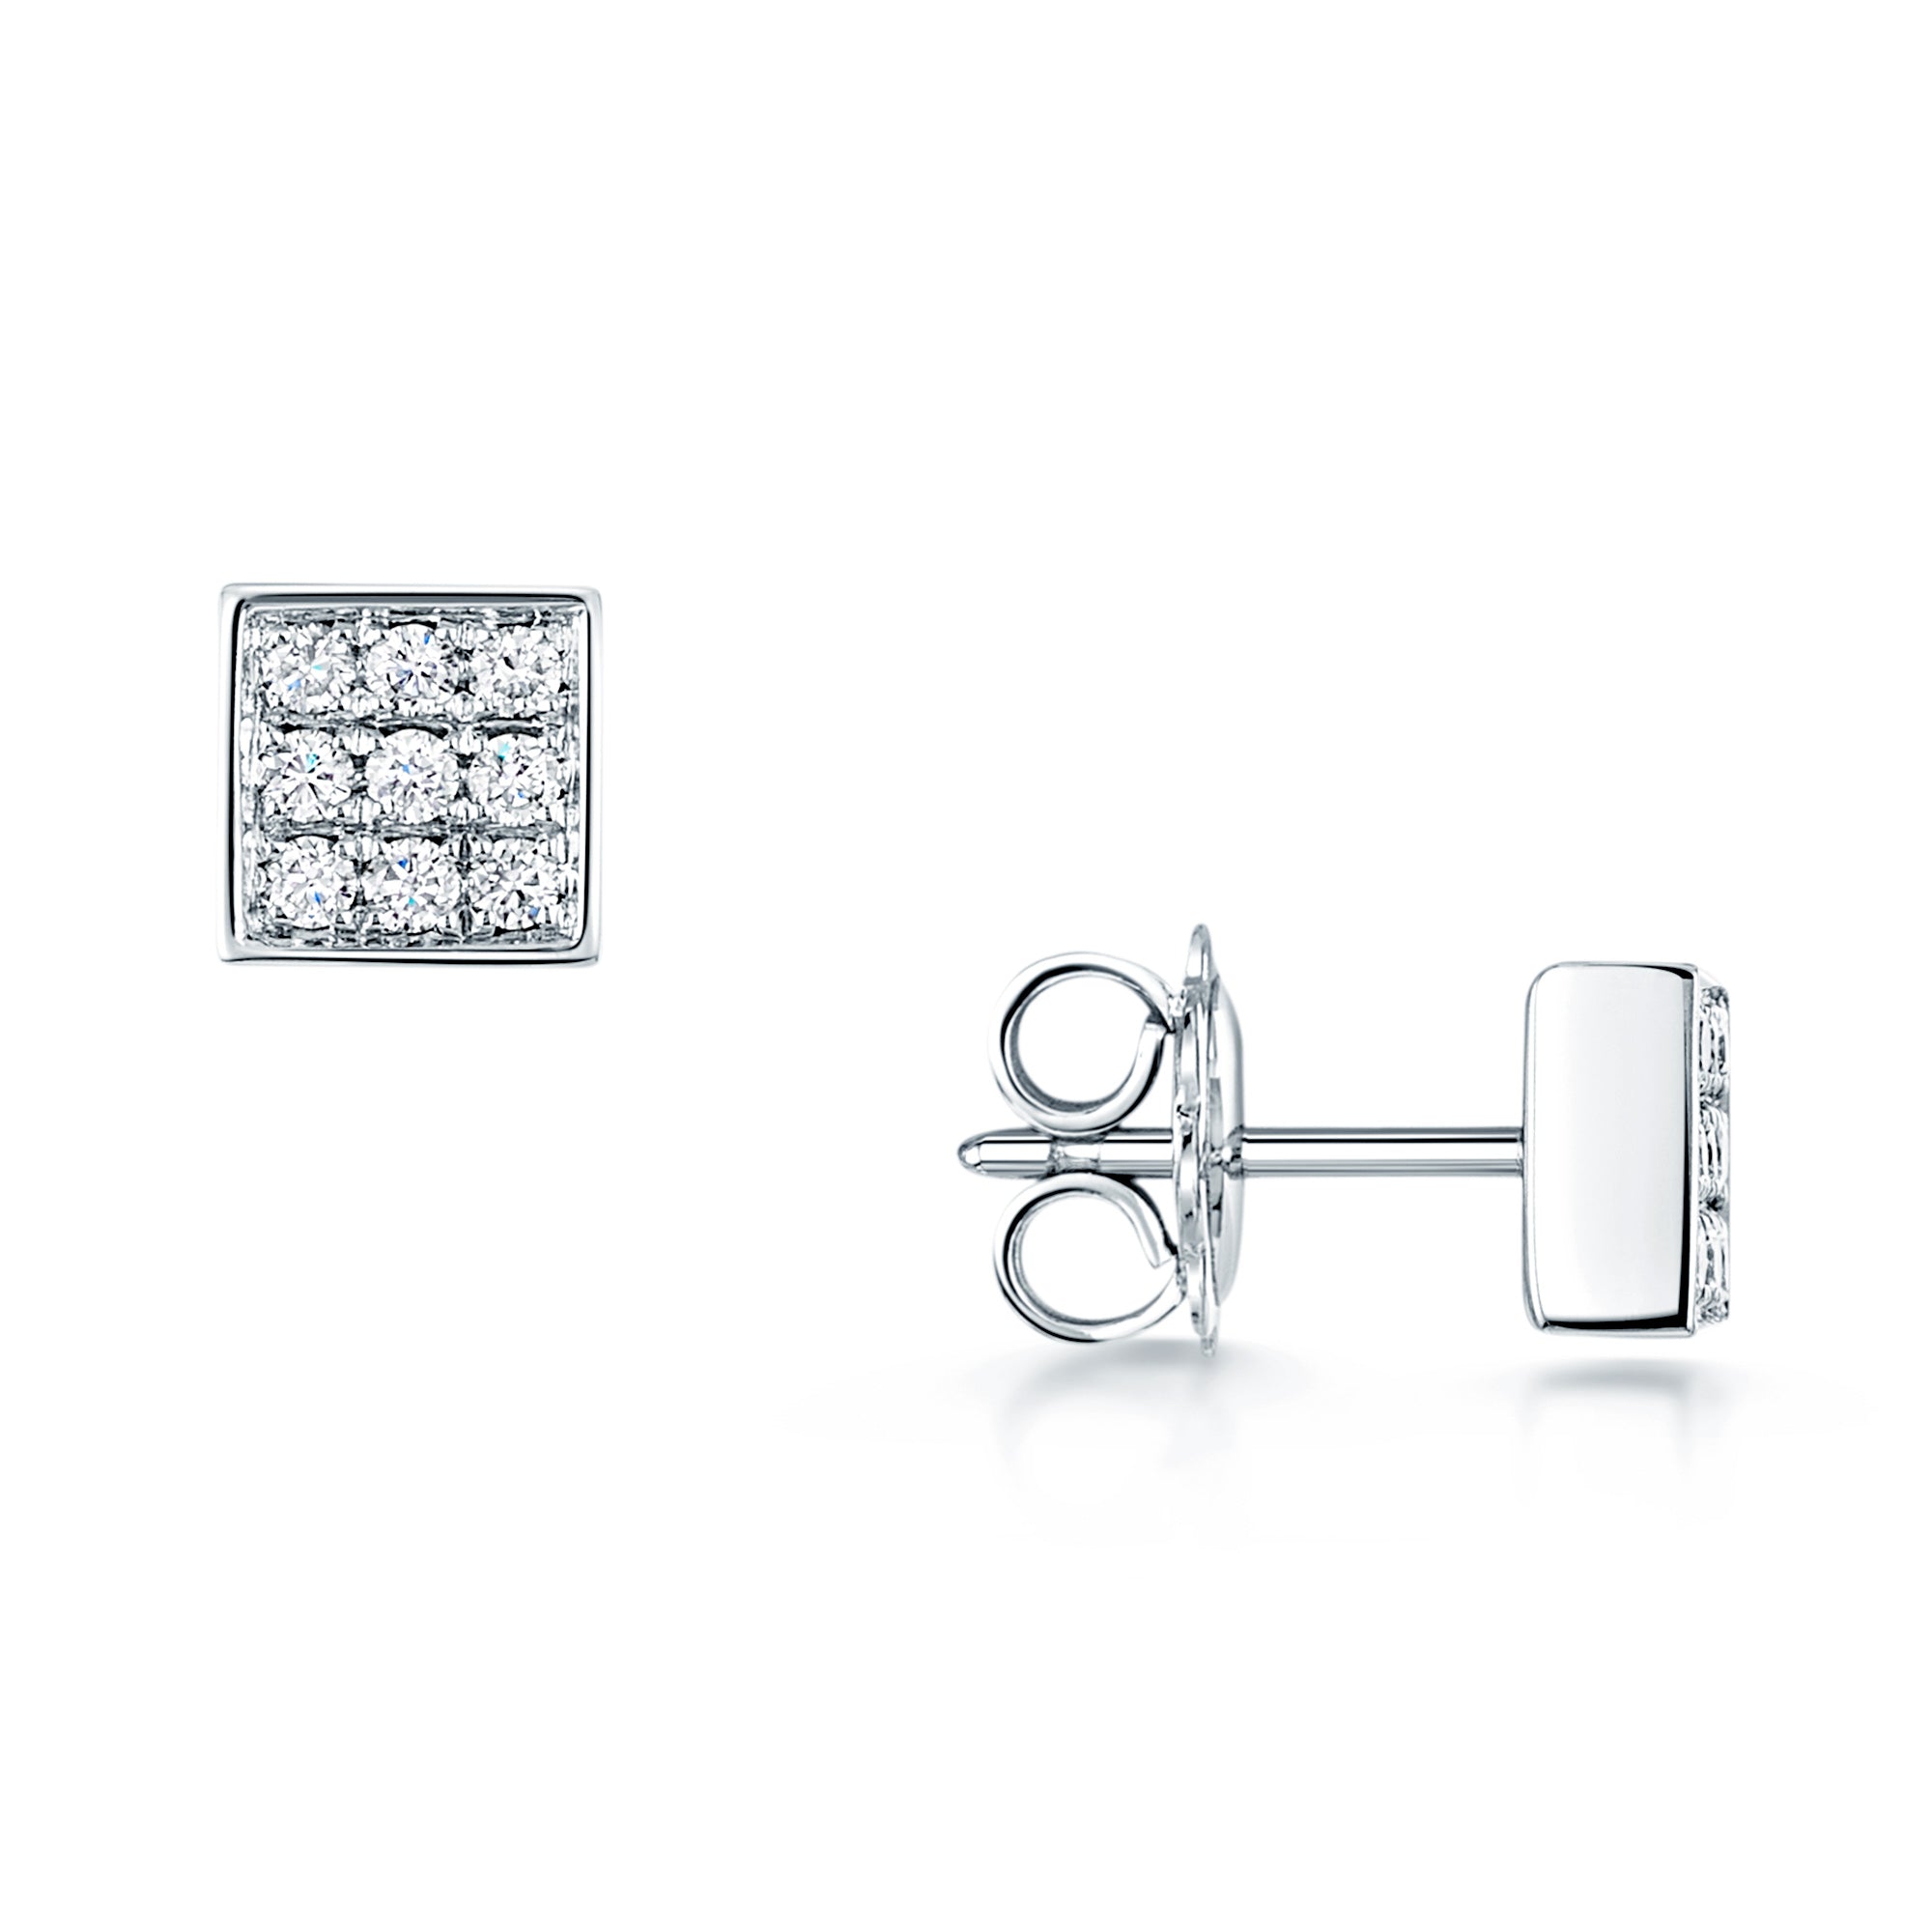 18ct White Gold Pave Diamond Set Square Stud Earrings